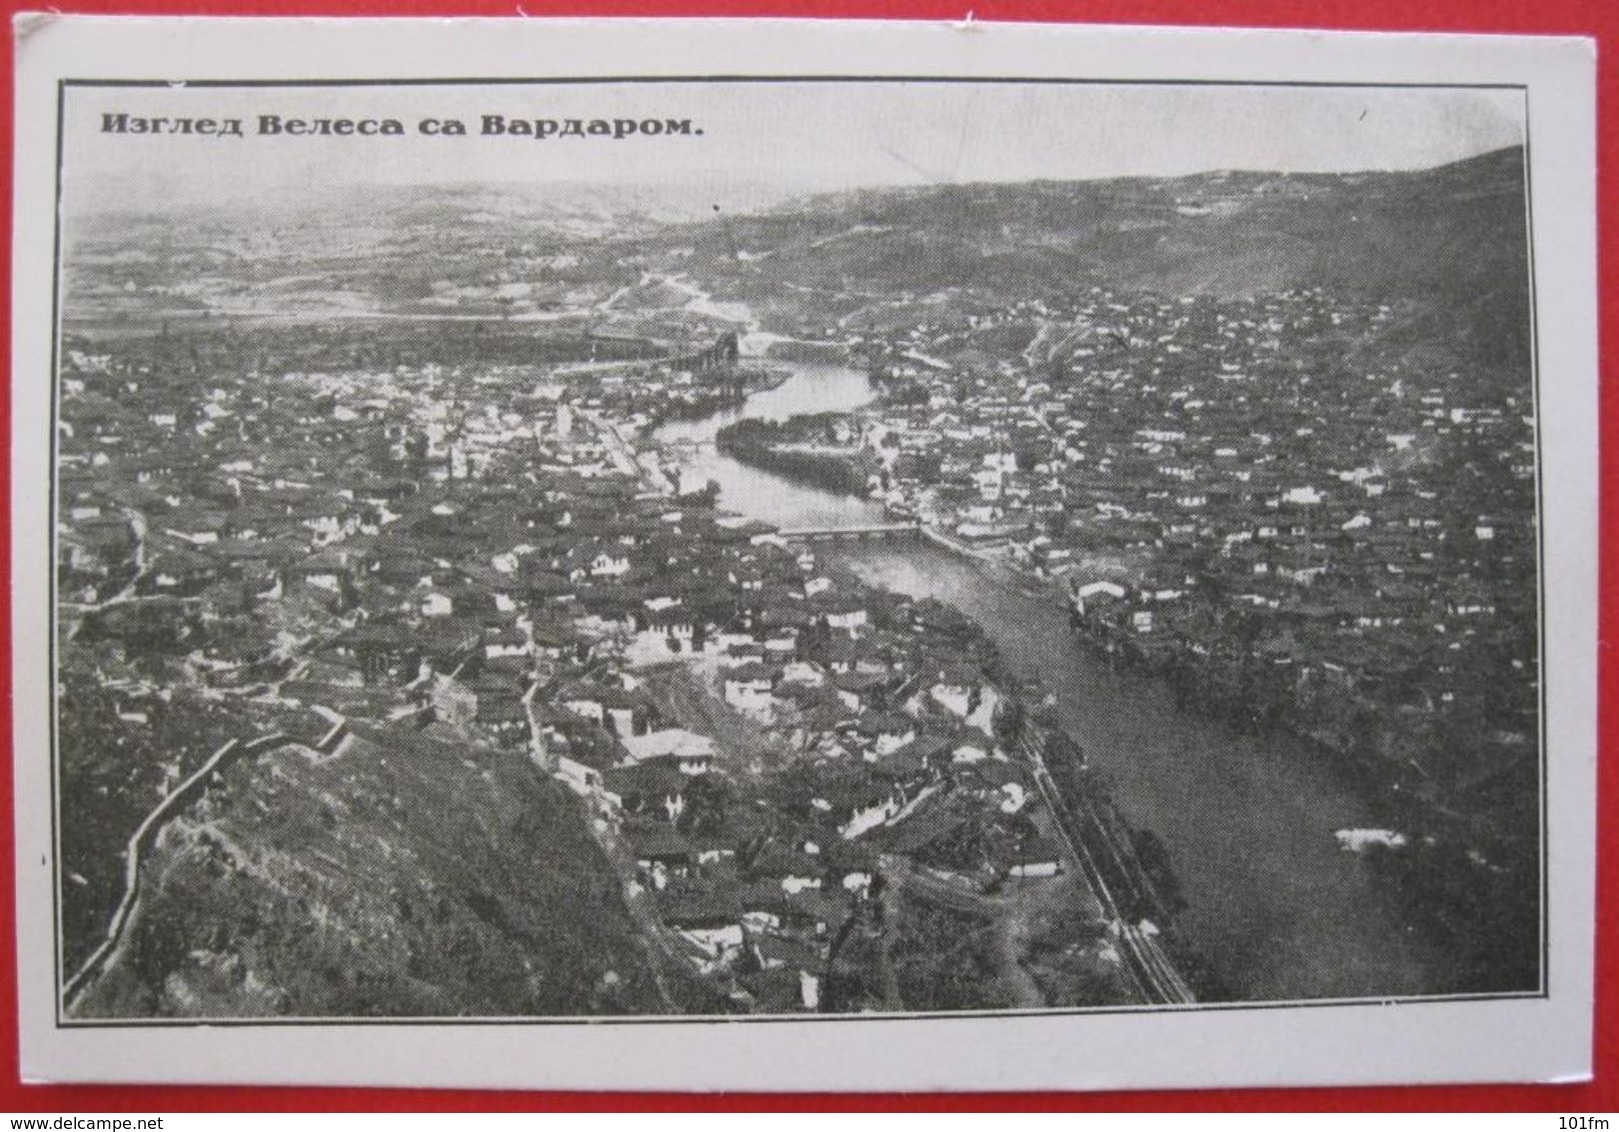 MACEDONIA - IZGLED VELESA SA VARDAROM - Macedonia Del Norte